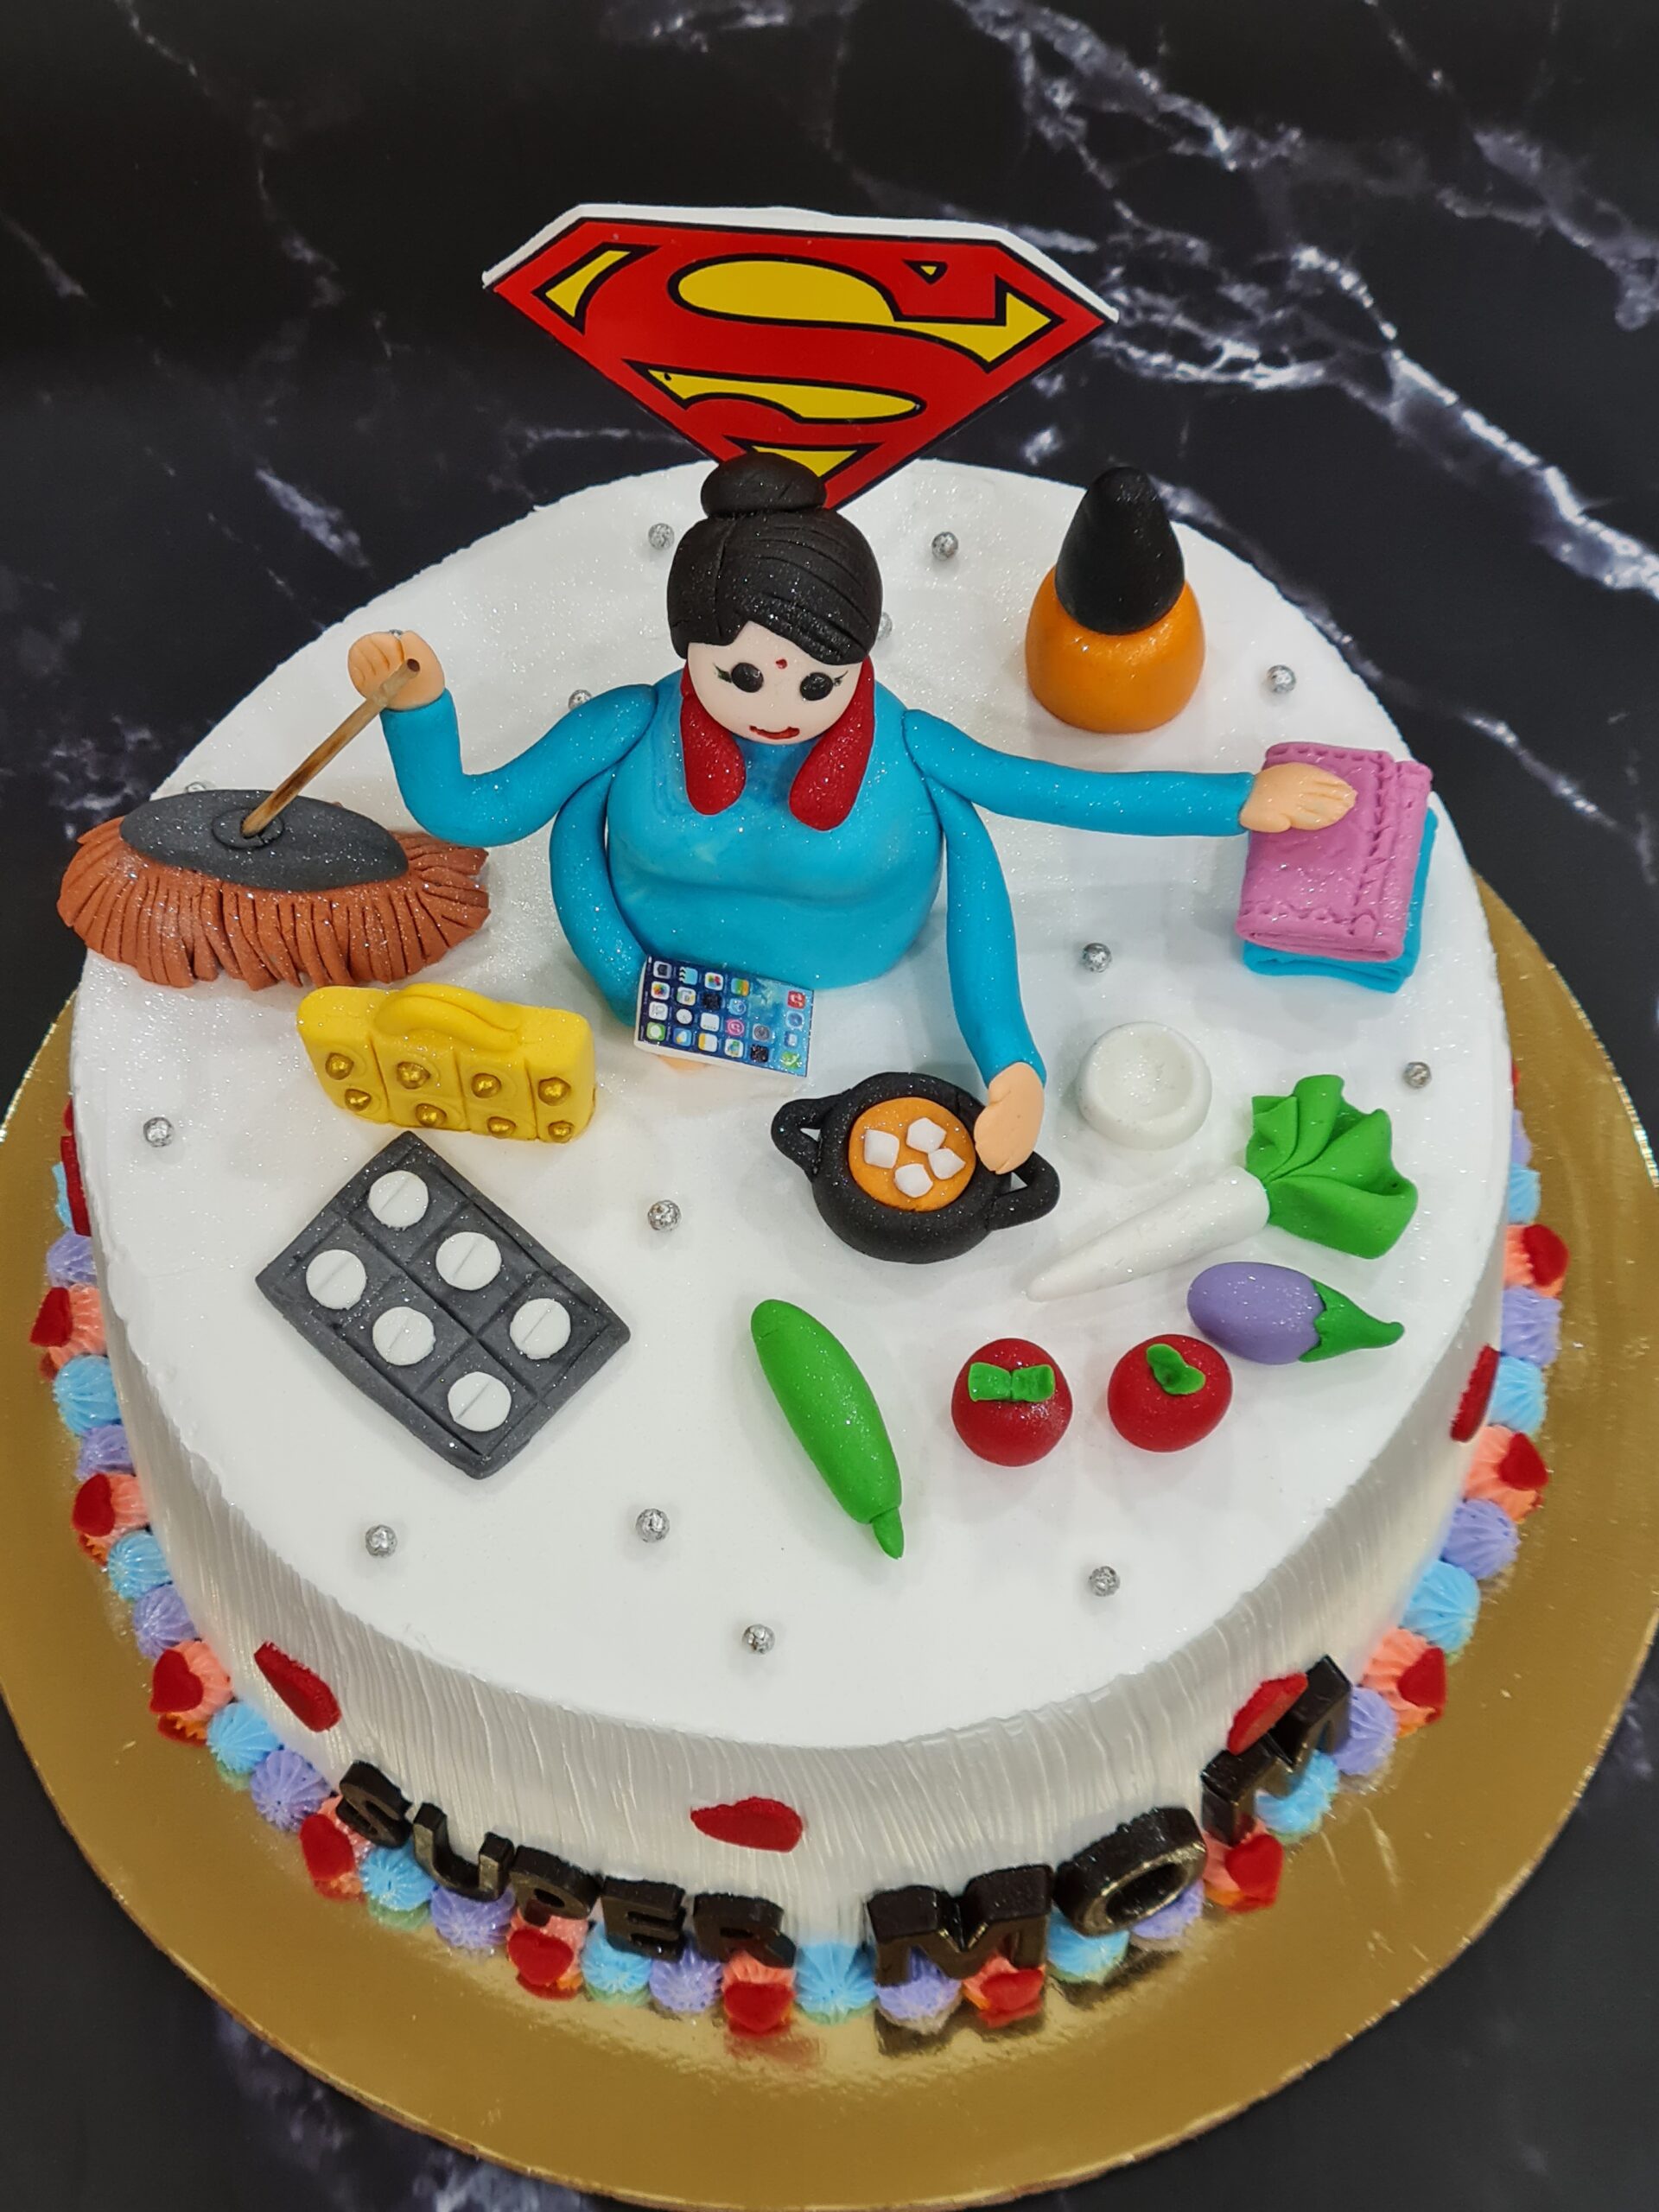 SuperMom CreamBlast Cake Half Kg : Gift/Send Mother's Day Gifts Online  JVS1175486 |IGP.com